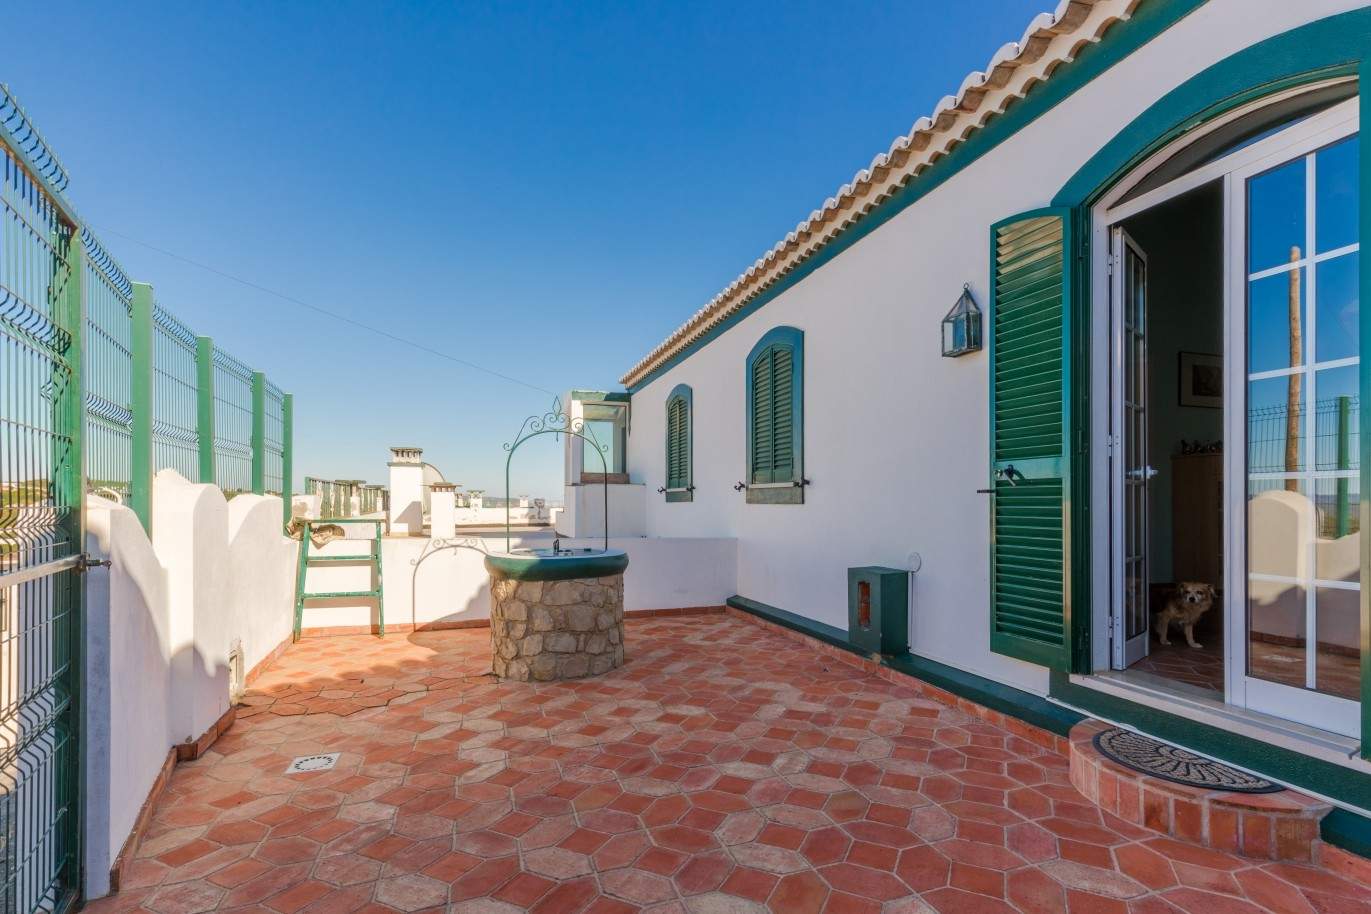 Freistehende villa zum Verkauf, Land Blick, Loulé, Algarve, Portugal_67629